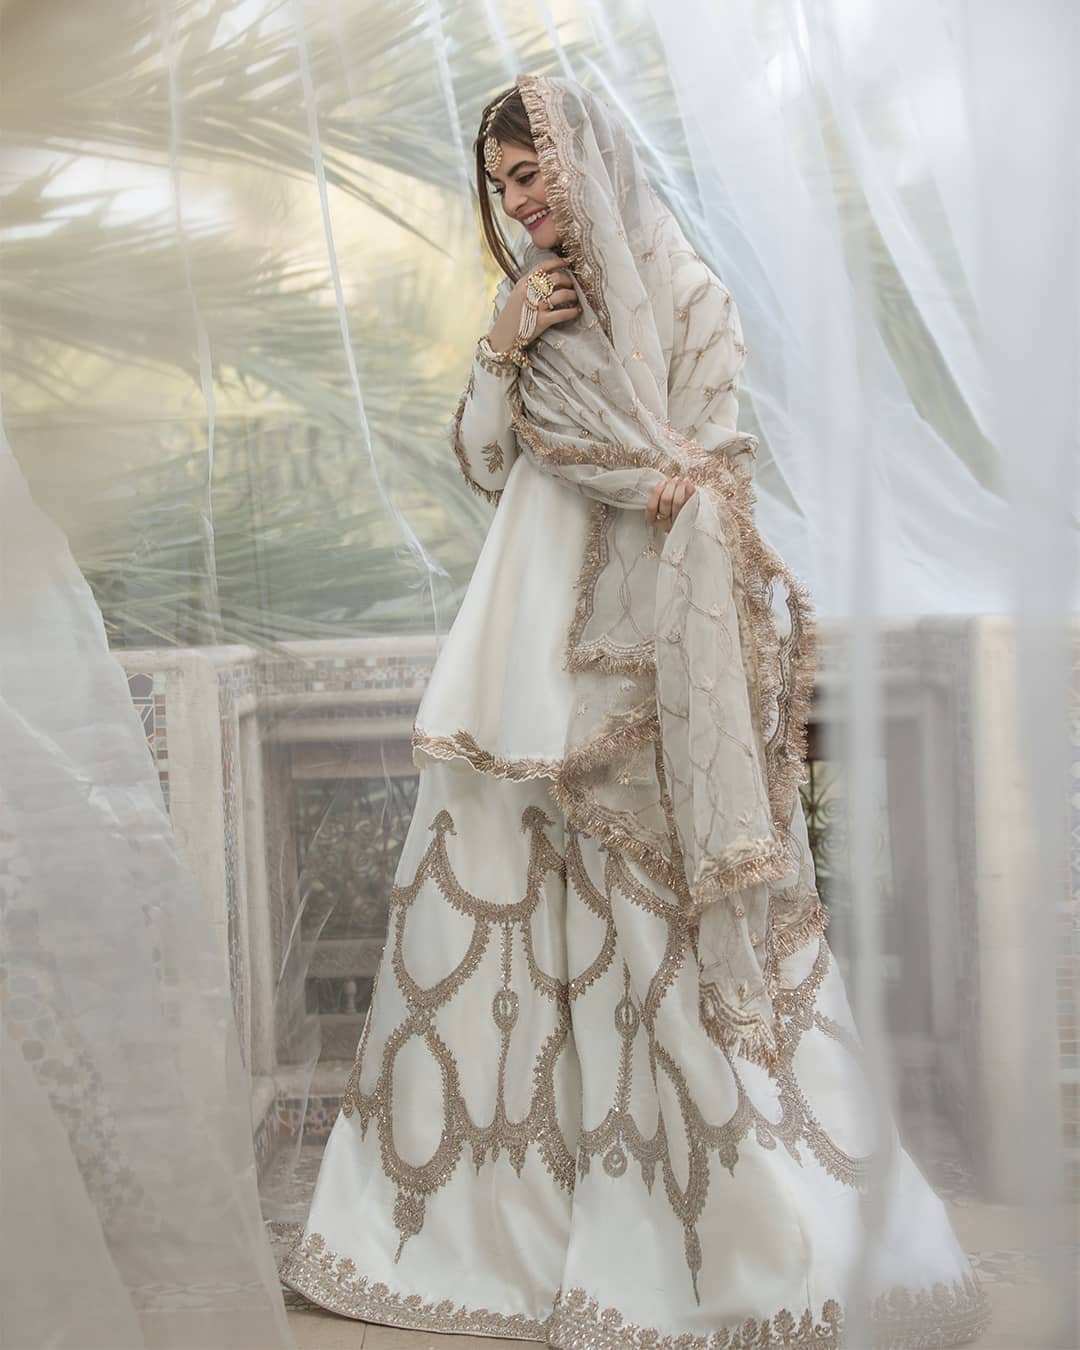 Beautiful Minal Khan Latest Bridal Dresses Photo Shoot